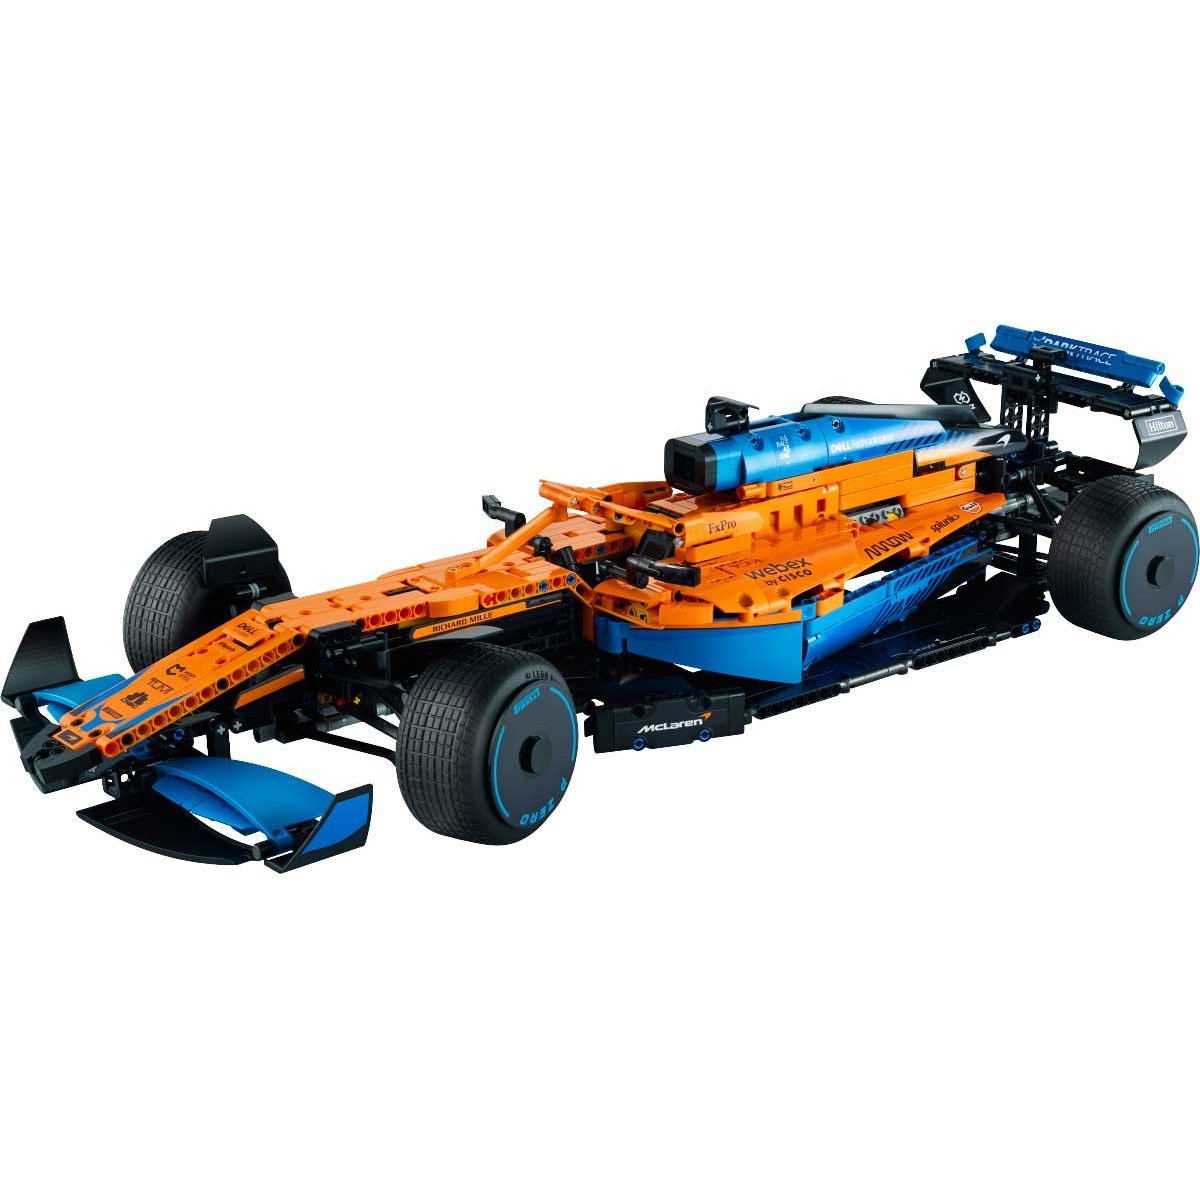 Auto de Carreras Mclaren Formula 1 Lego Technic